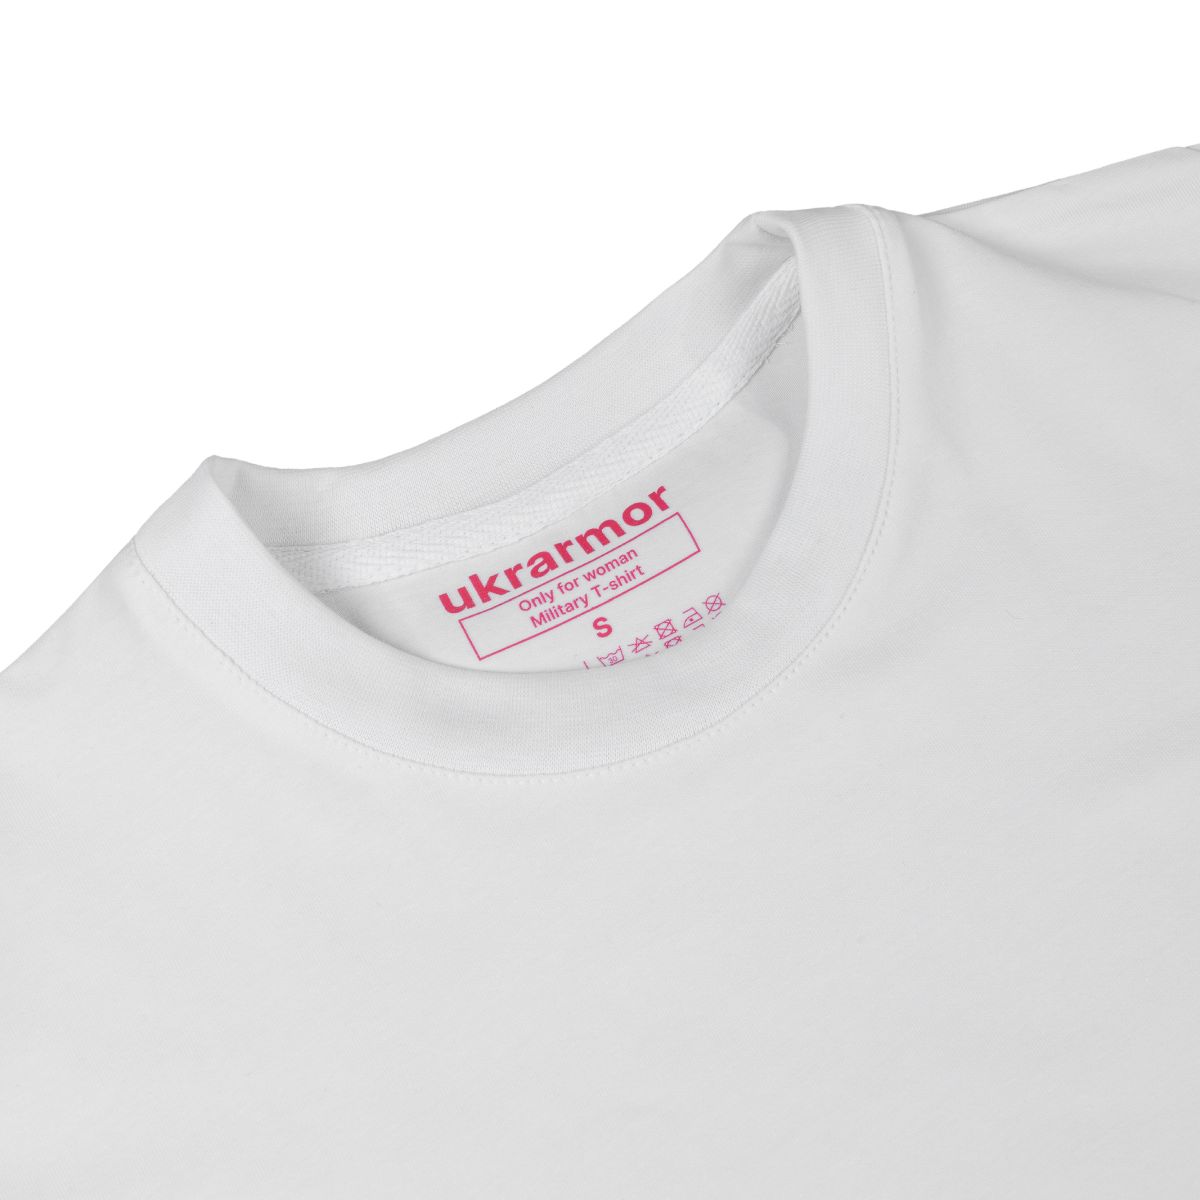 Жіноча футболка Ukrarmor Only for women. Біла. Розмір S 4